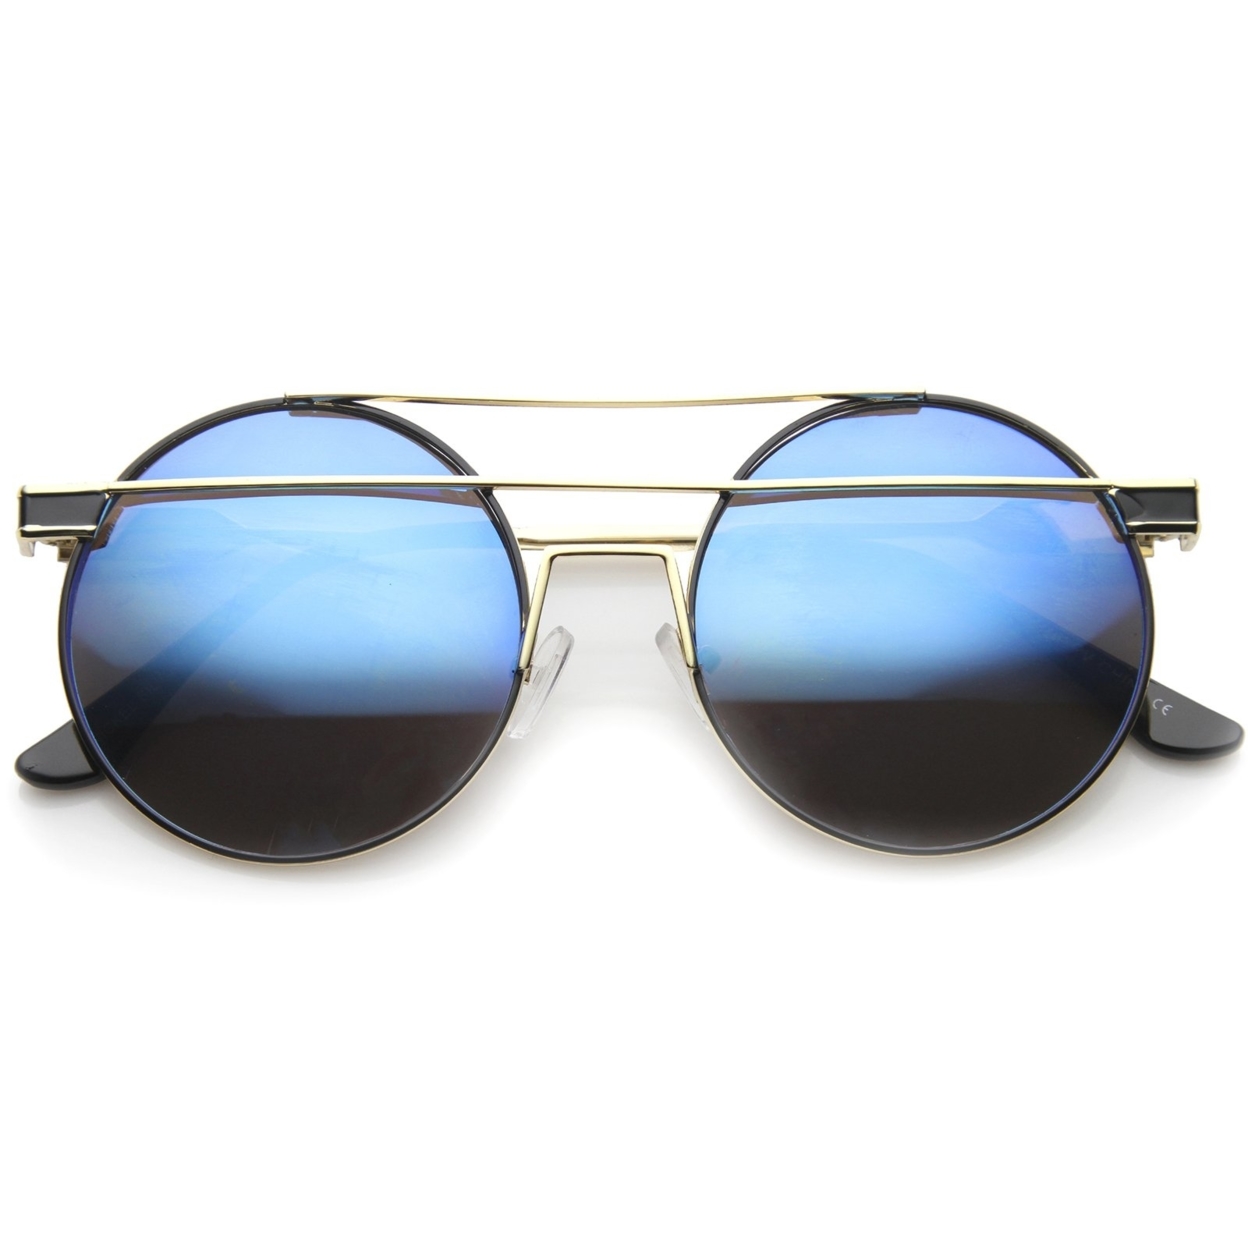 Modern Metal Frame Double Bridge Colored Mirror Lens Round Sunglasses 59mm - Gold-Black / Blue Mirror